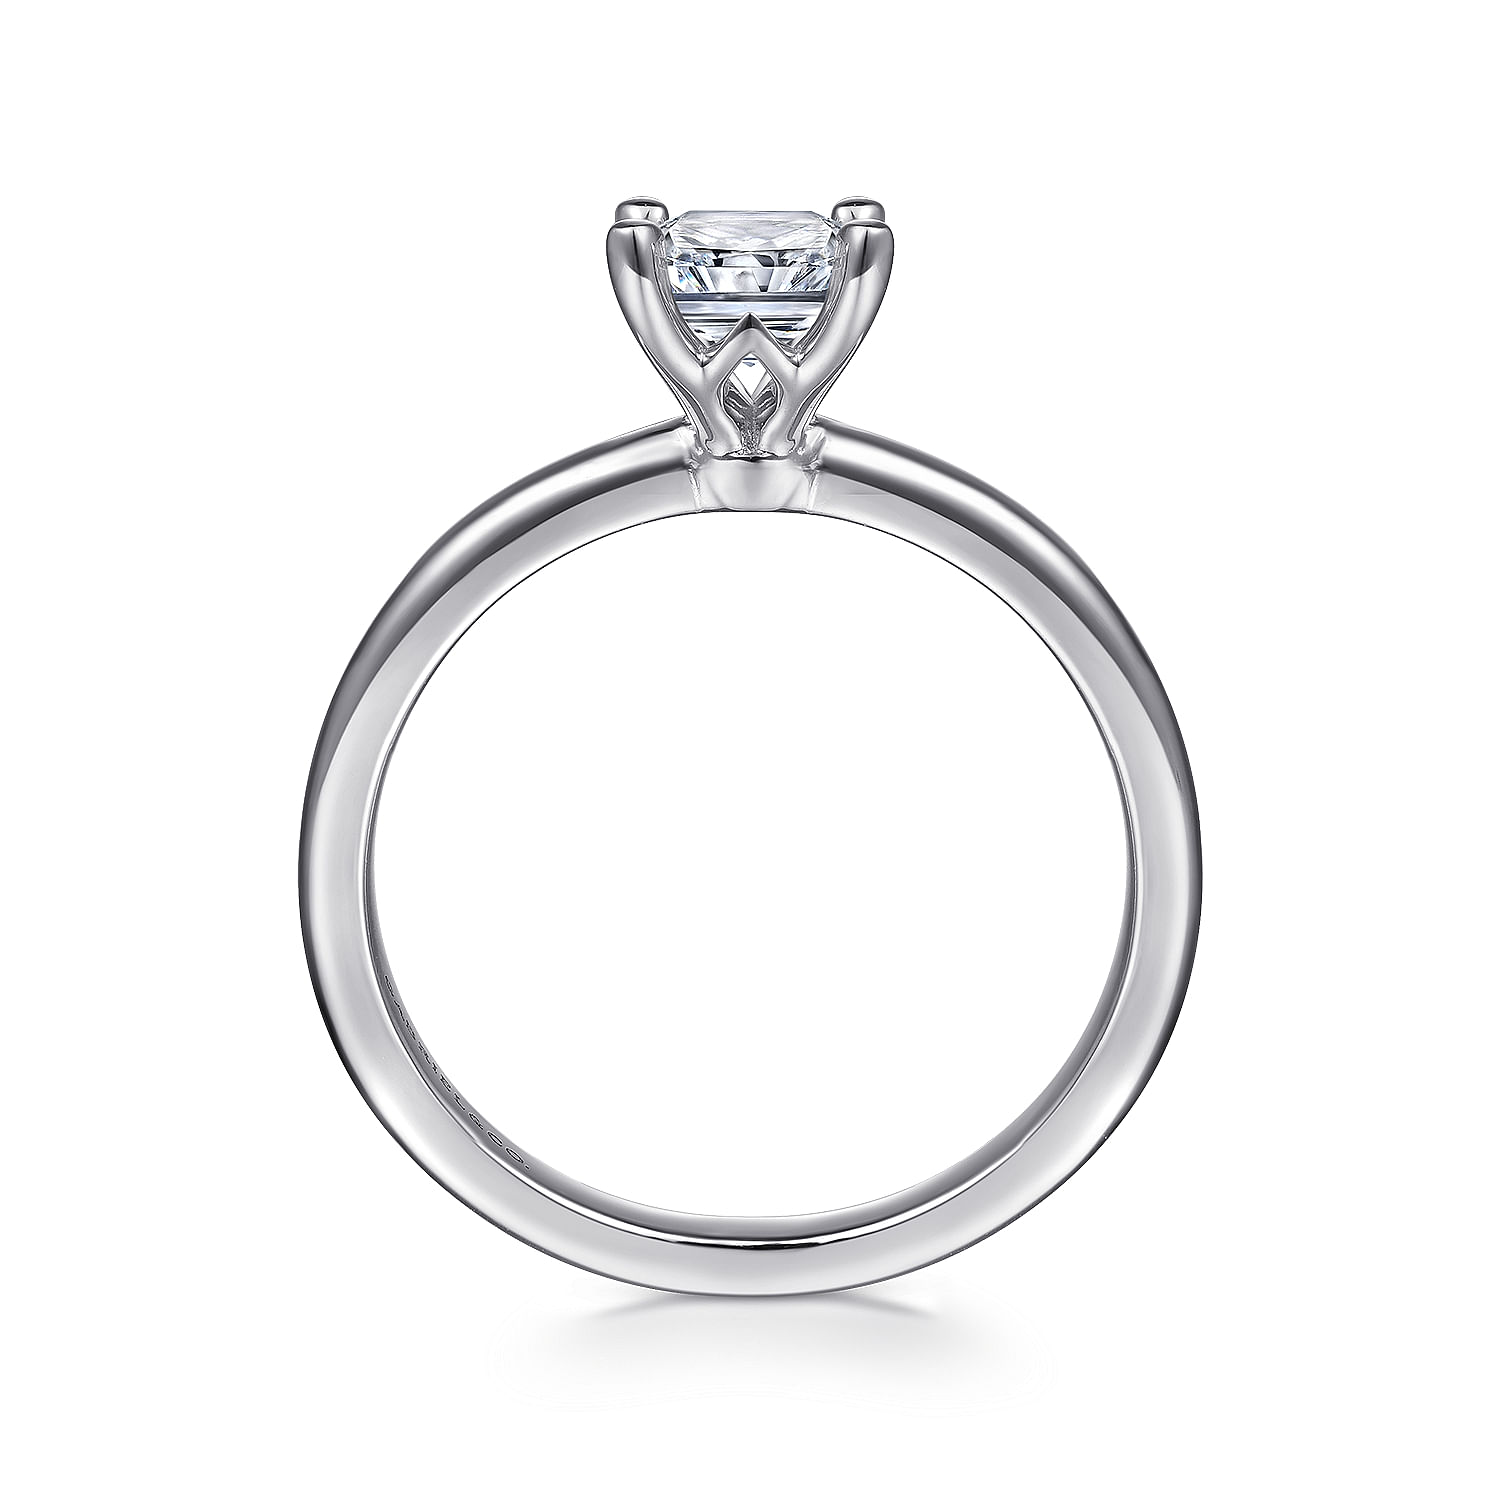 14K White Gold Rectangular Radiant Cut Diamond Engagement Ring